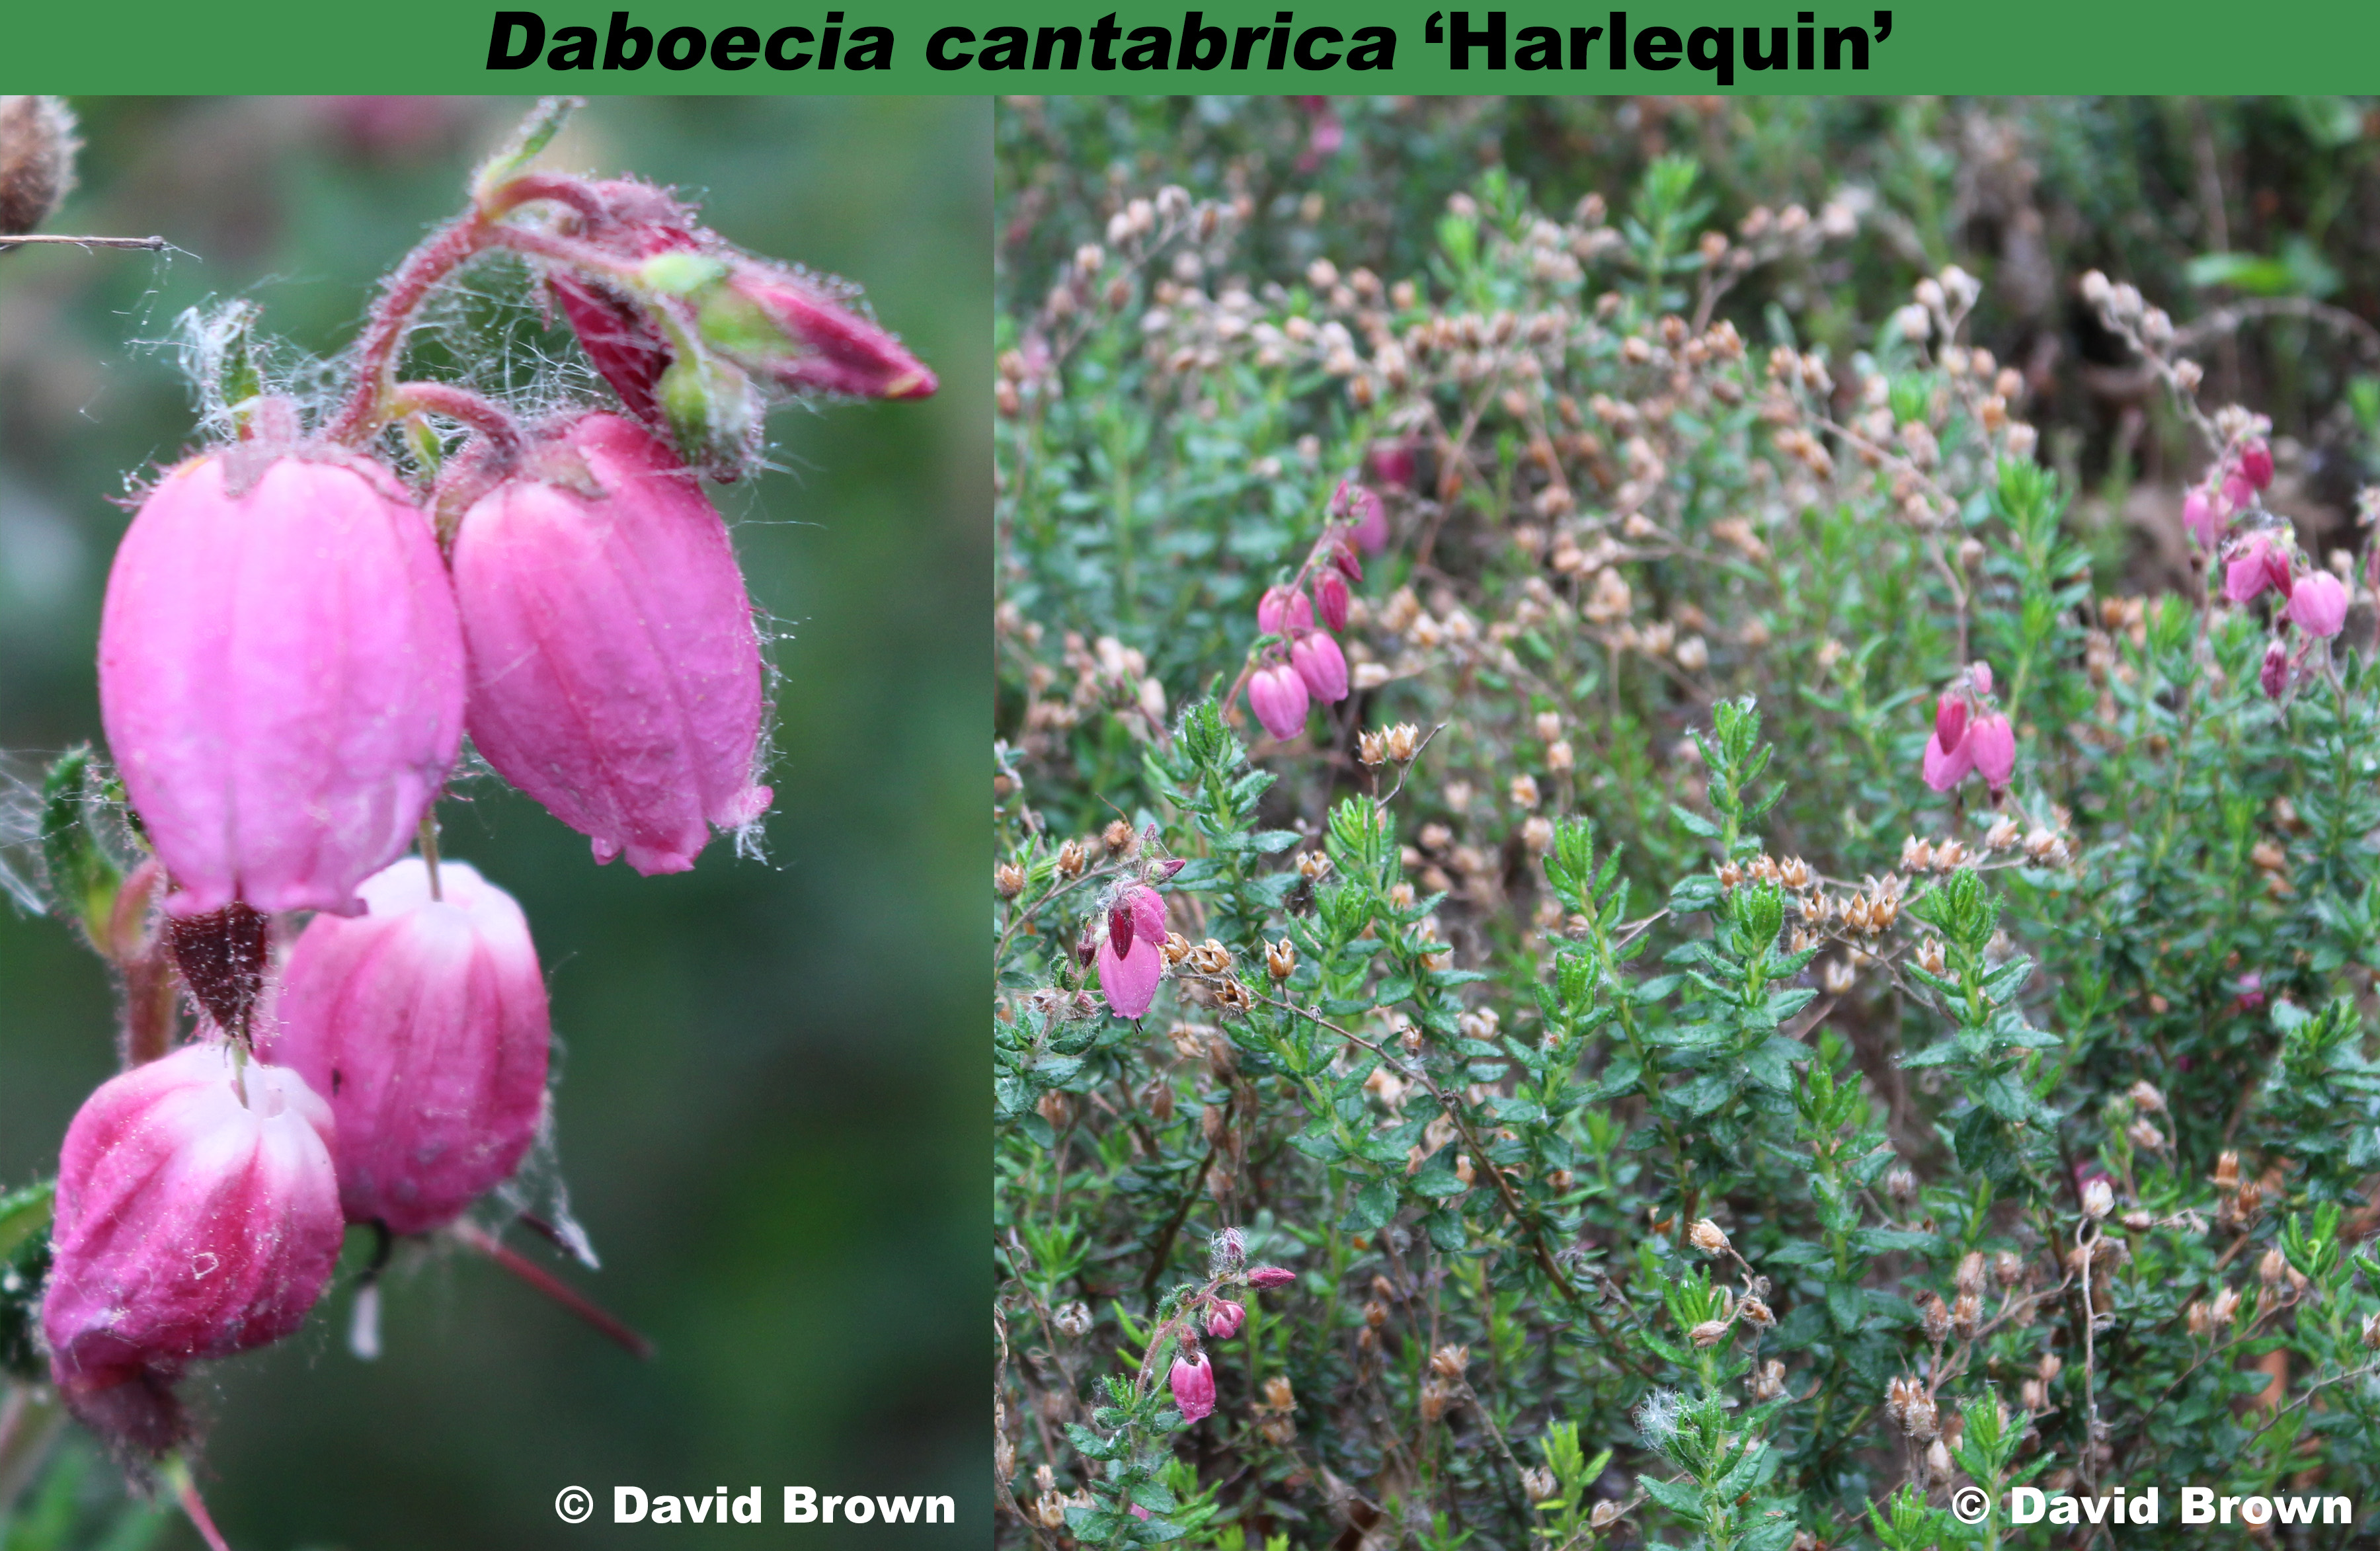 10x irlandeses Heide waleys red-Daboecia cantabrica